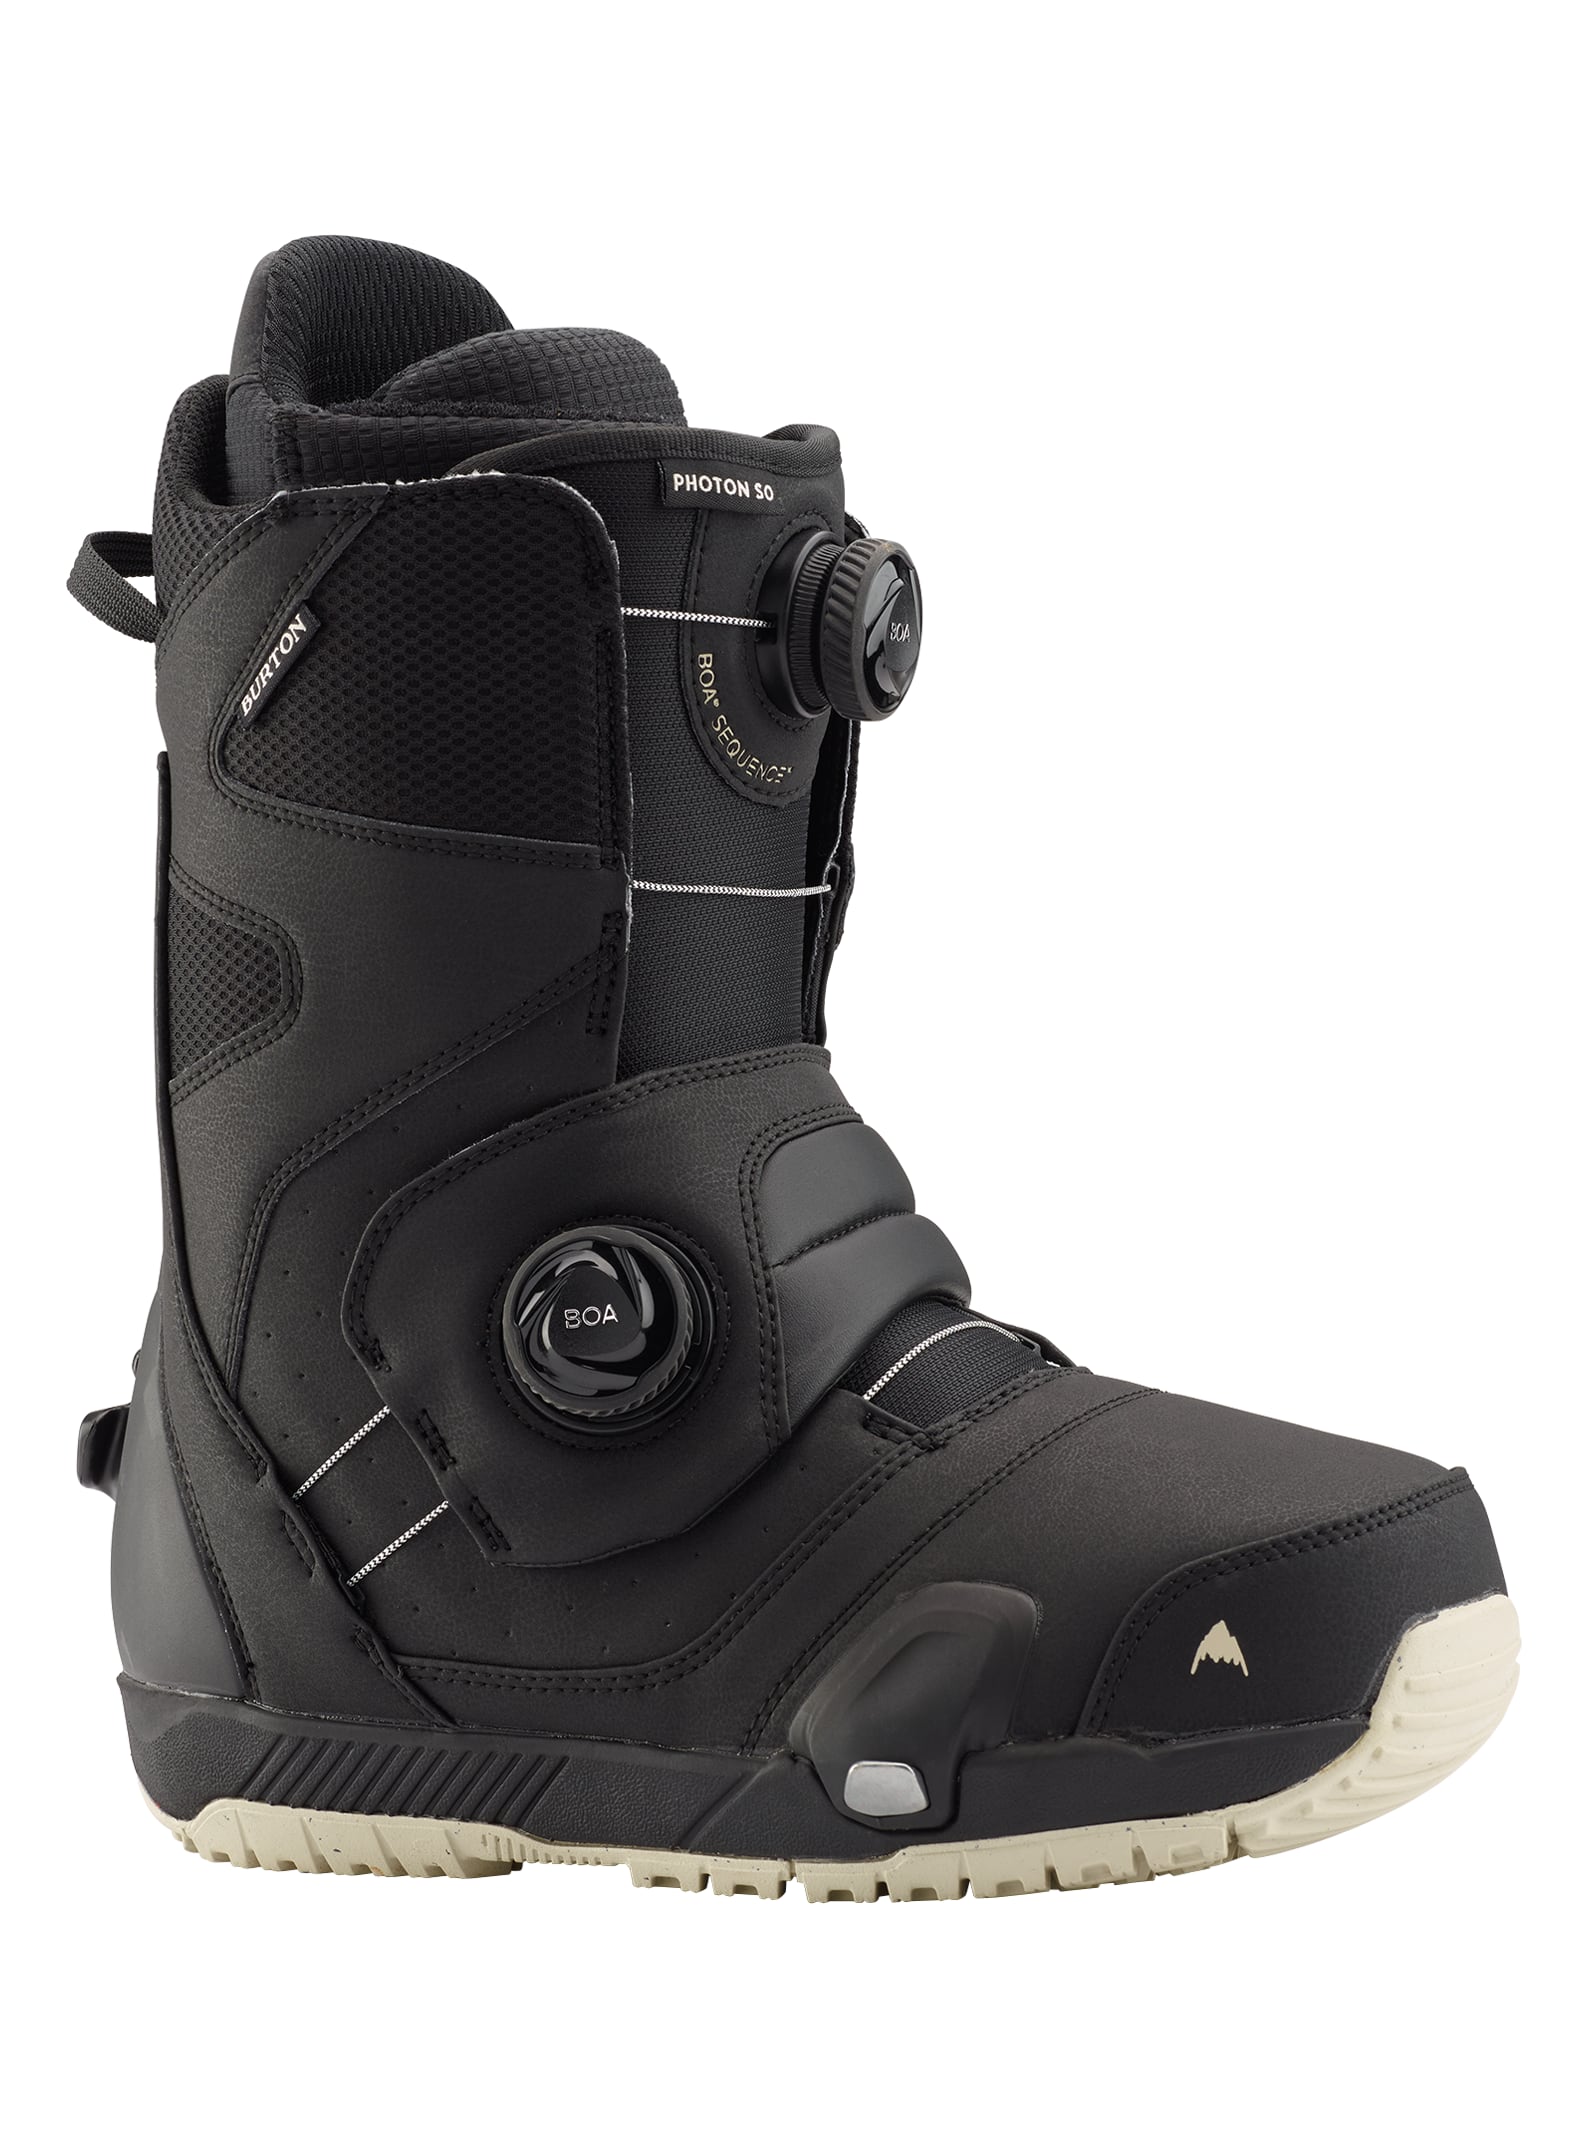 Burton - Boots de snowboard Step On® Photon homme, Black, 10